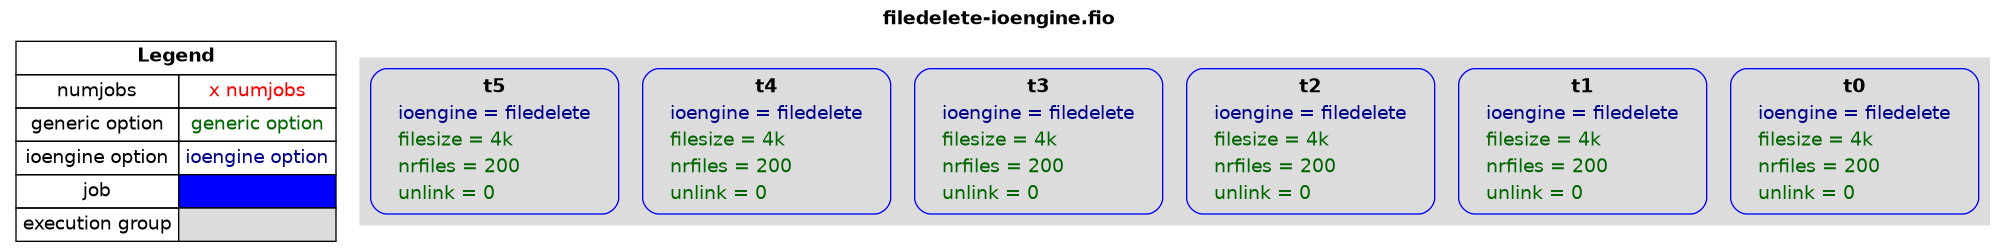 examples/filedelete-ioengine.png